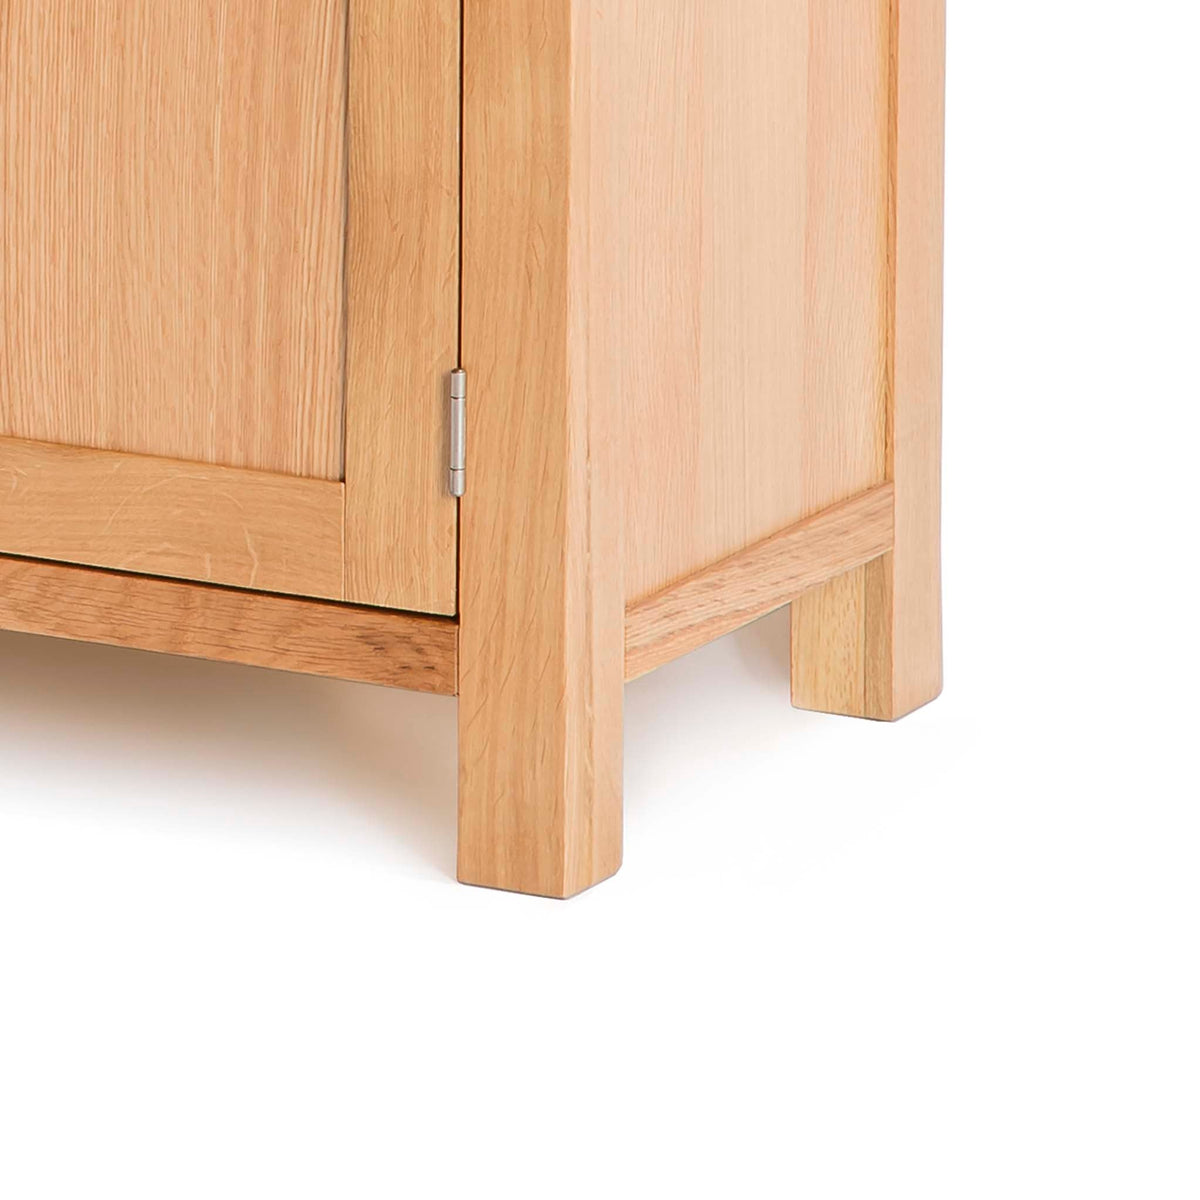  Abbey Light Oak Small Sideboard Cabinet  - Close up of sideboard feet